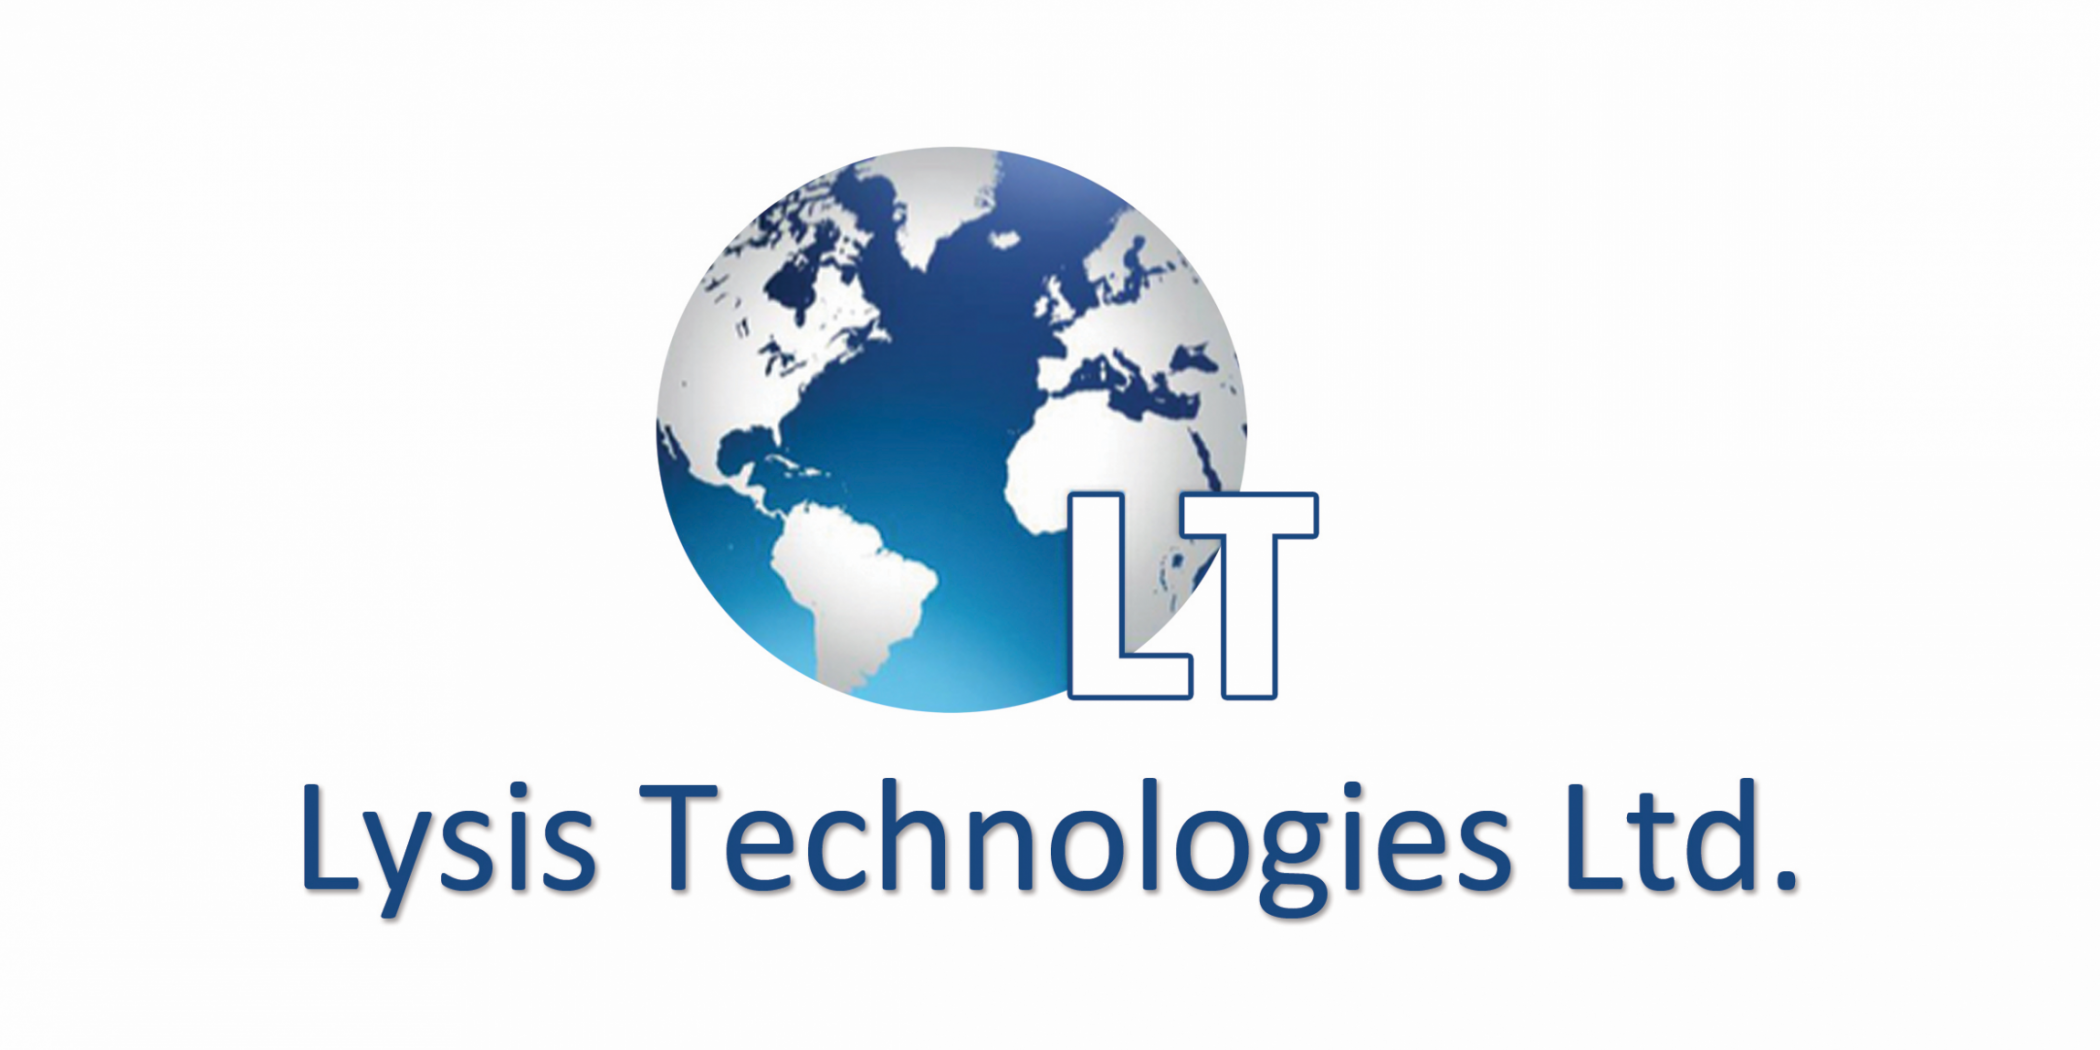 Lysis Technologies and Tesoplas wishing you well